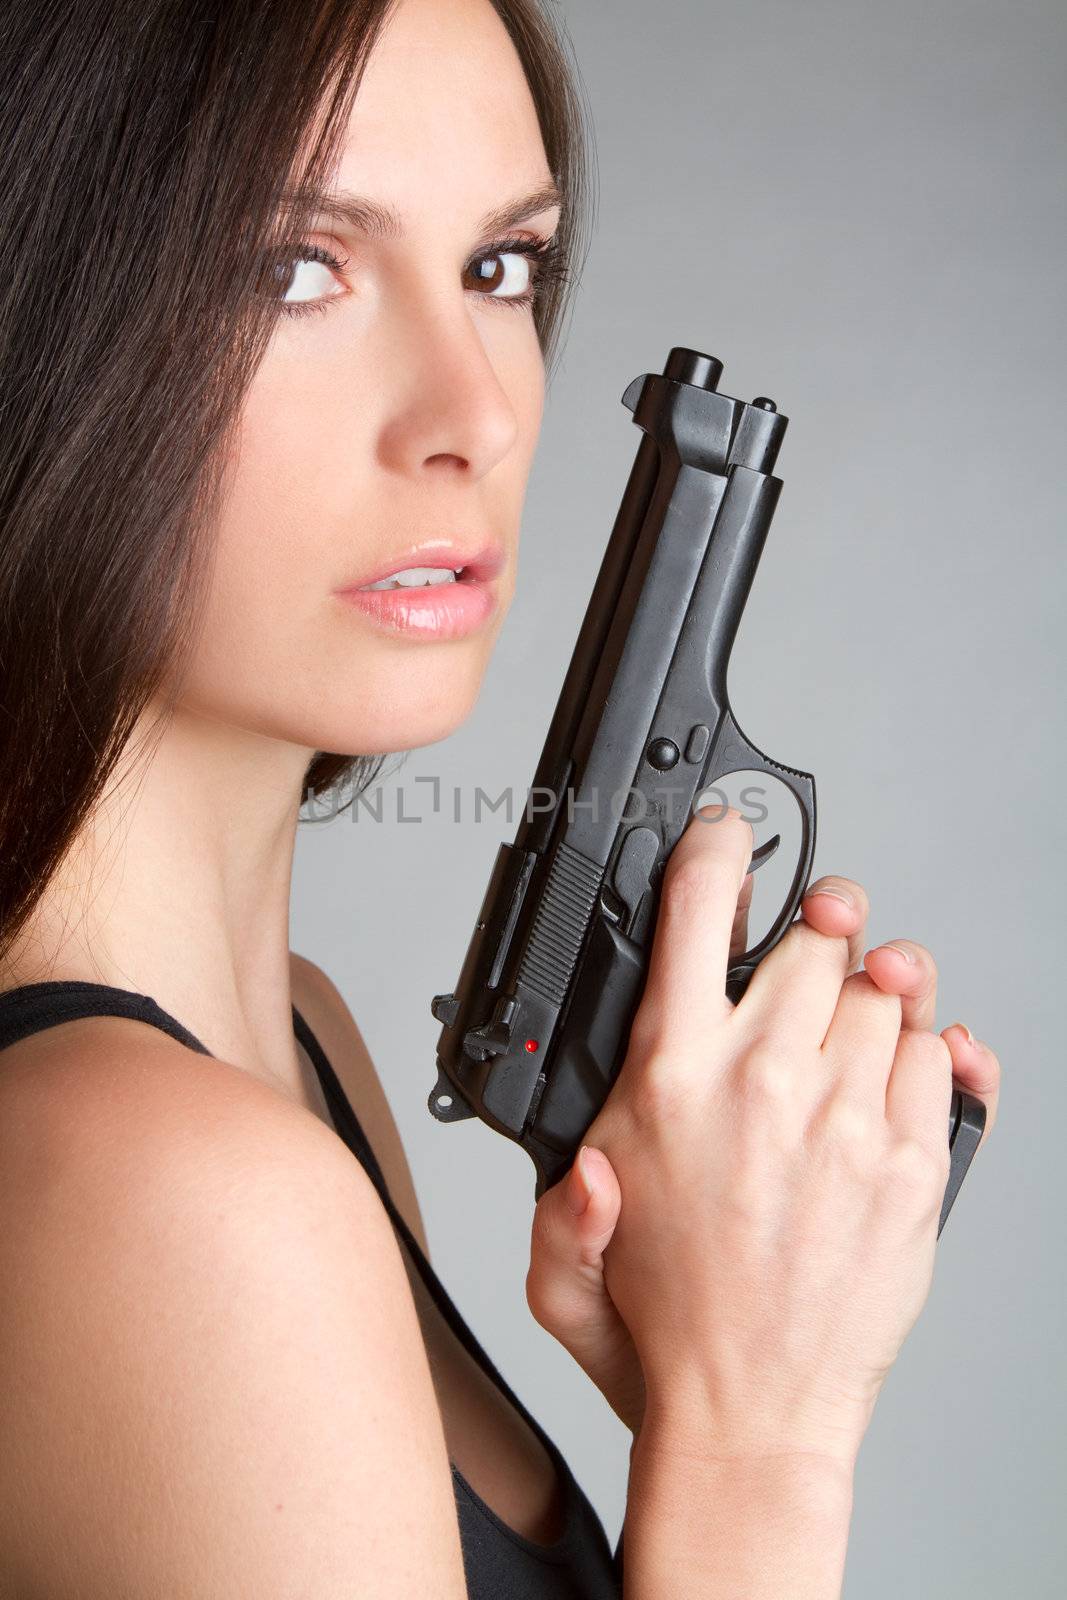 Woman Holding Gun by keeweeboy